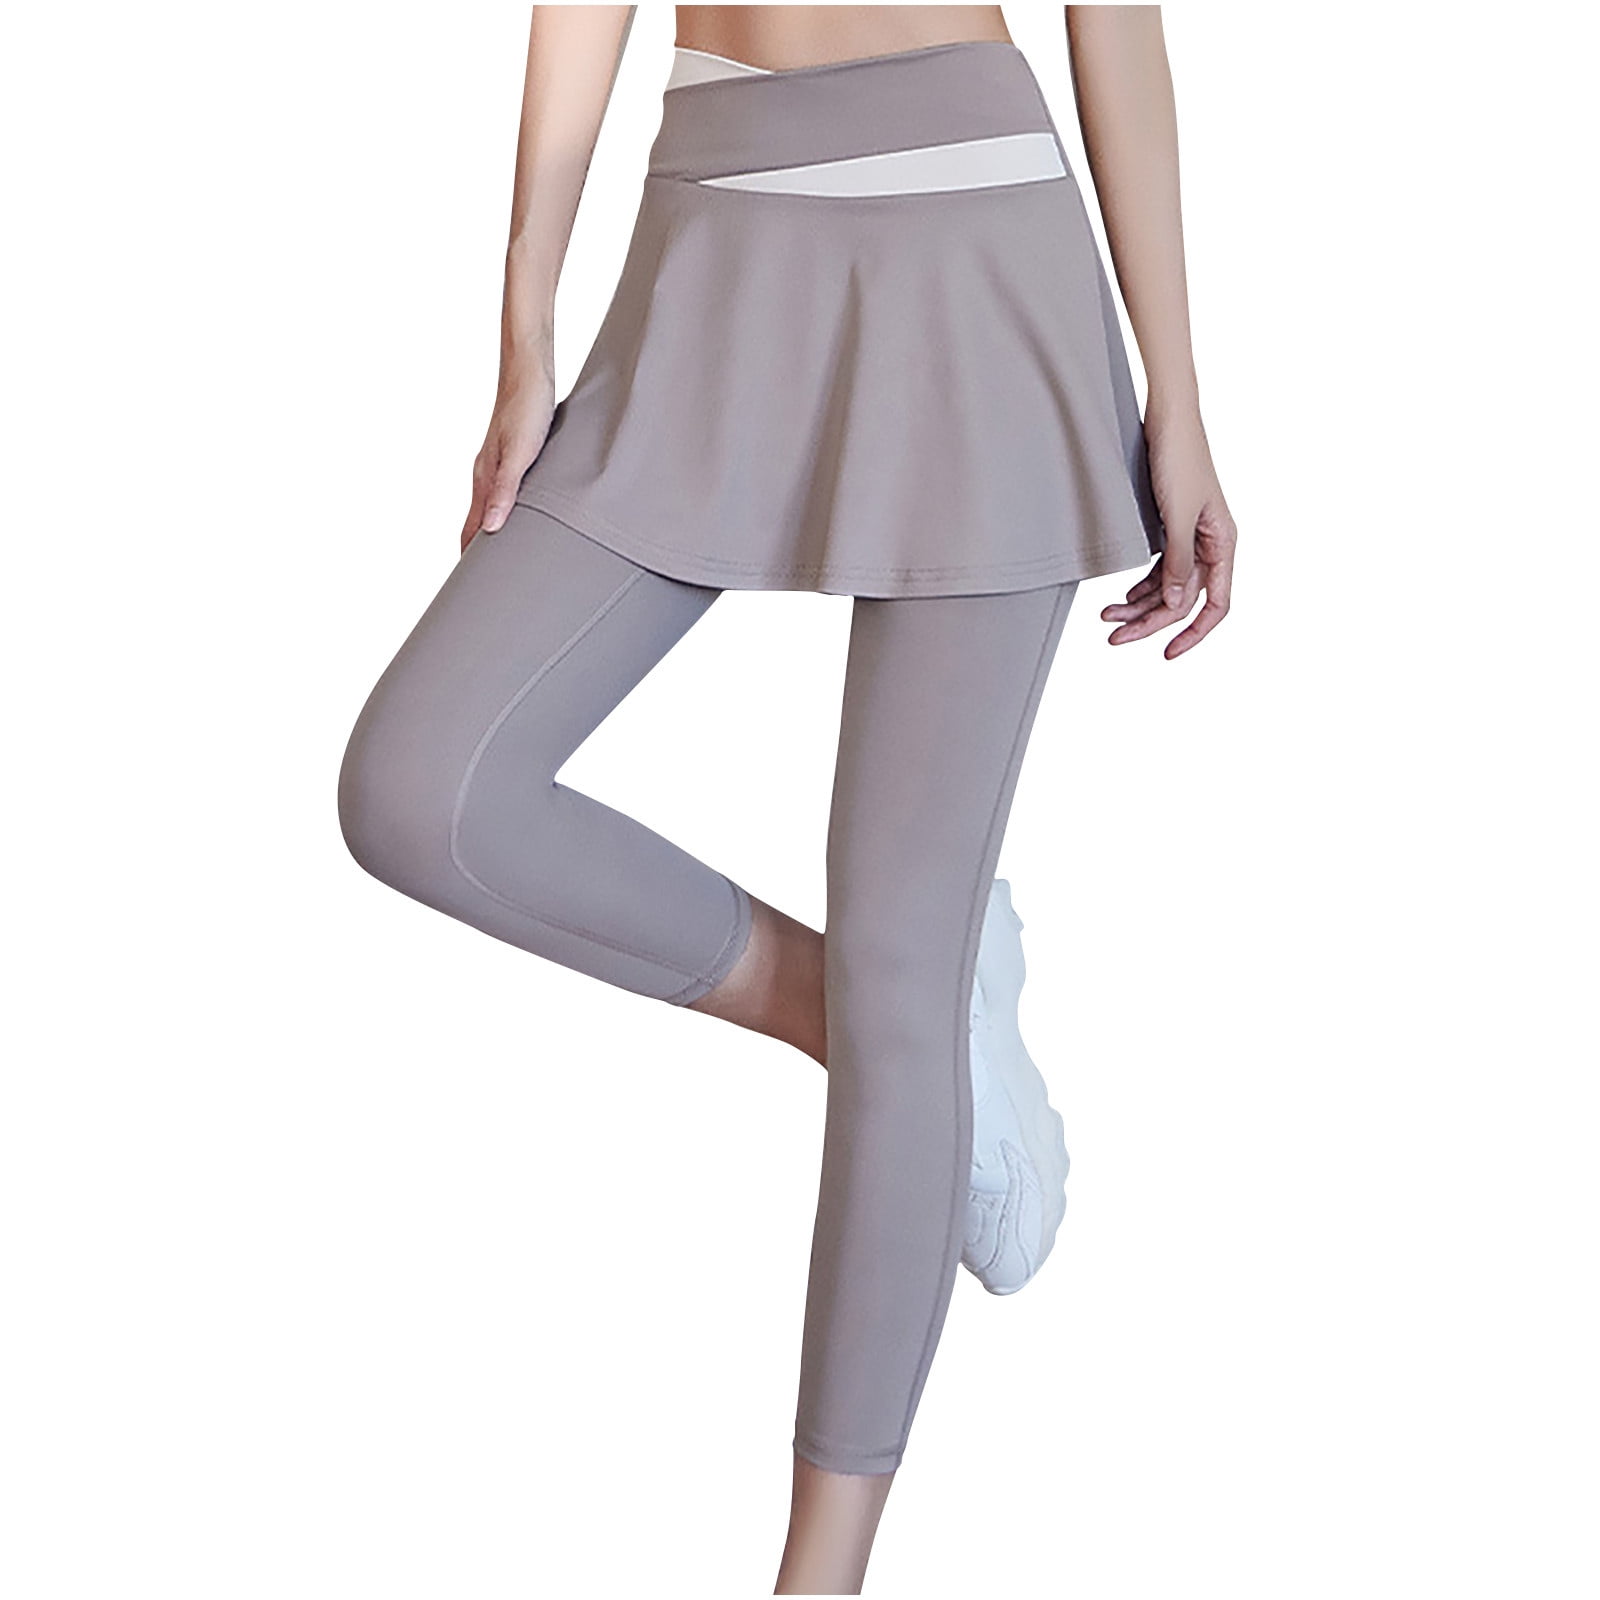 VERTVIE Womens Yoga Skorts Elastic Running Leggings For Fitness, Gym, And  Outdoor Sports Anti Ex Exposure Skirt From Jhfg021, $37.92